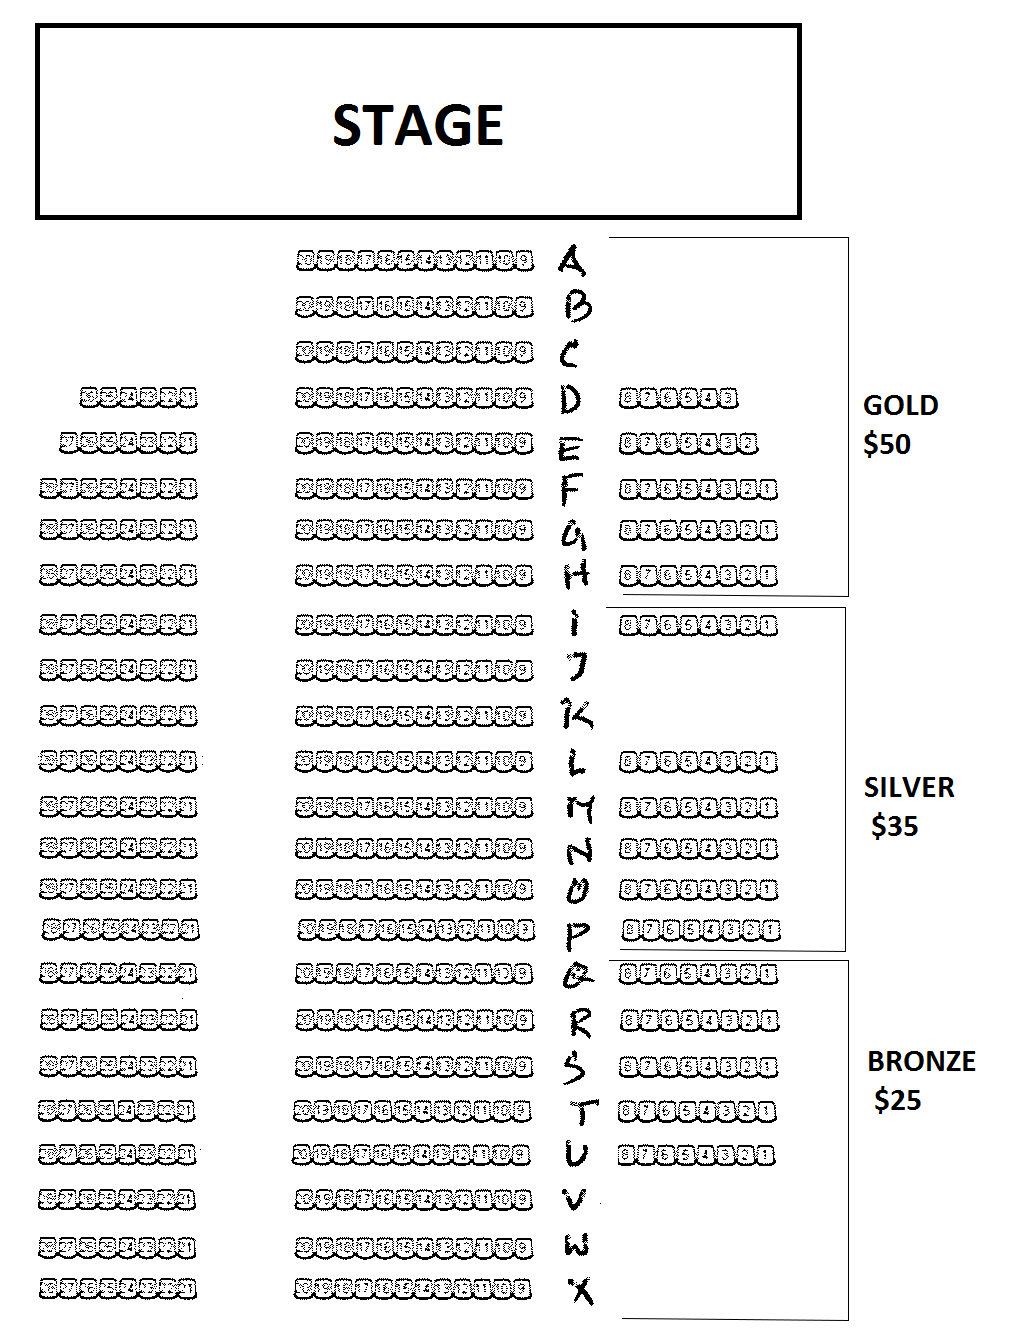 Seat Map in Marana Auditorium for Fahmida Nabi & Bappa Mazumder Sydney Australia Concert 2016